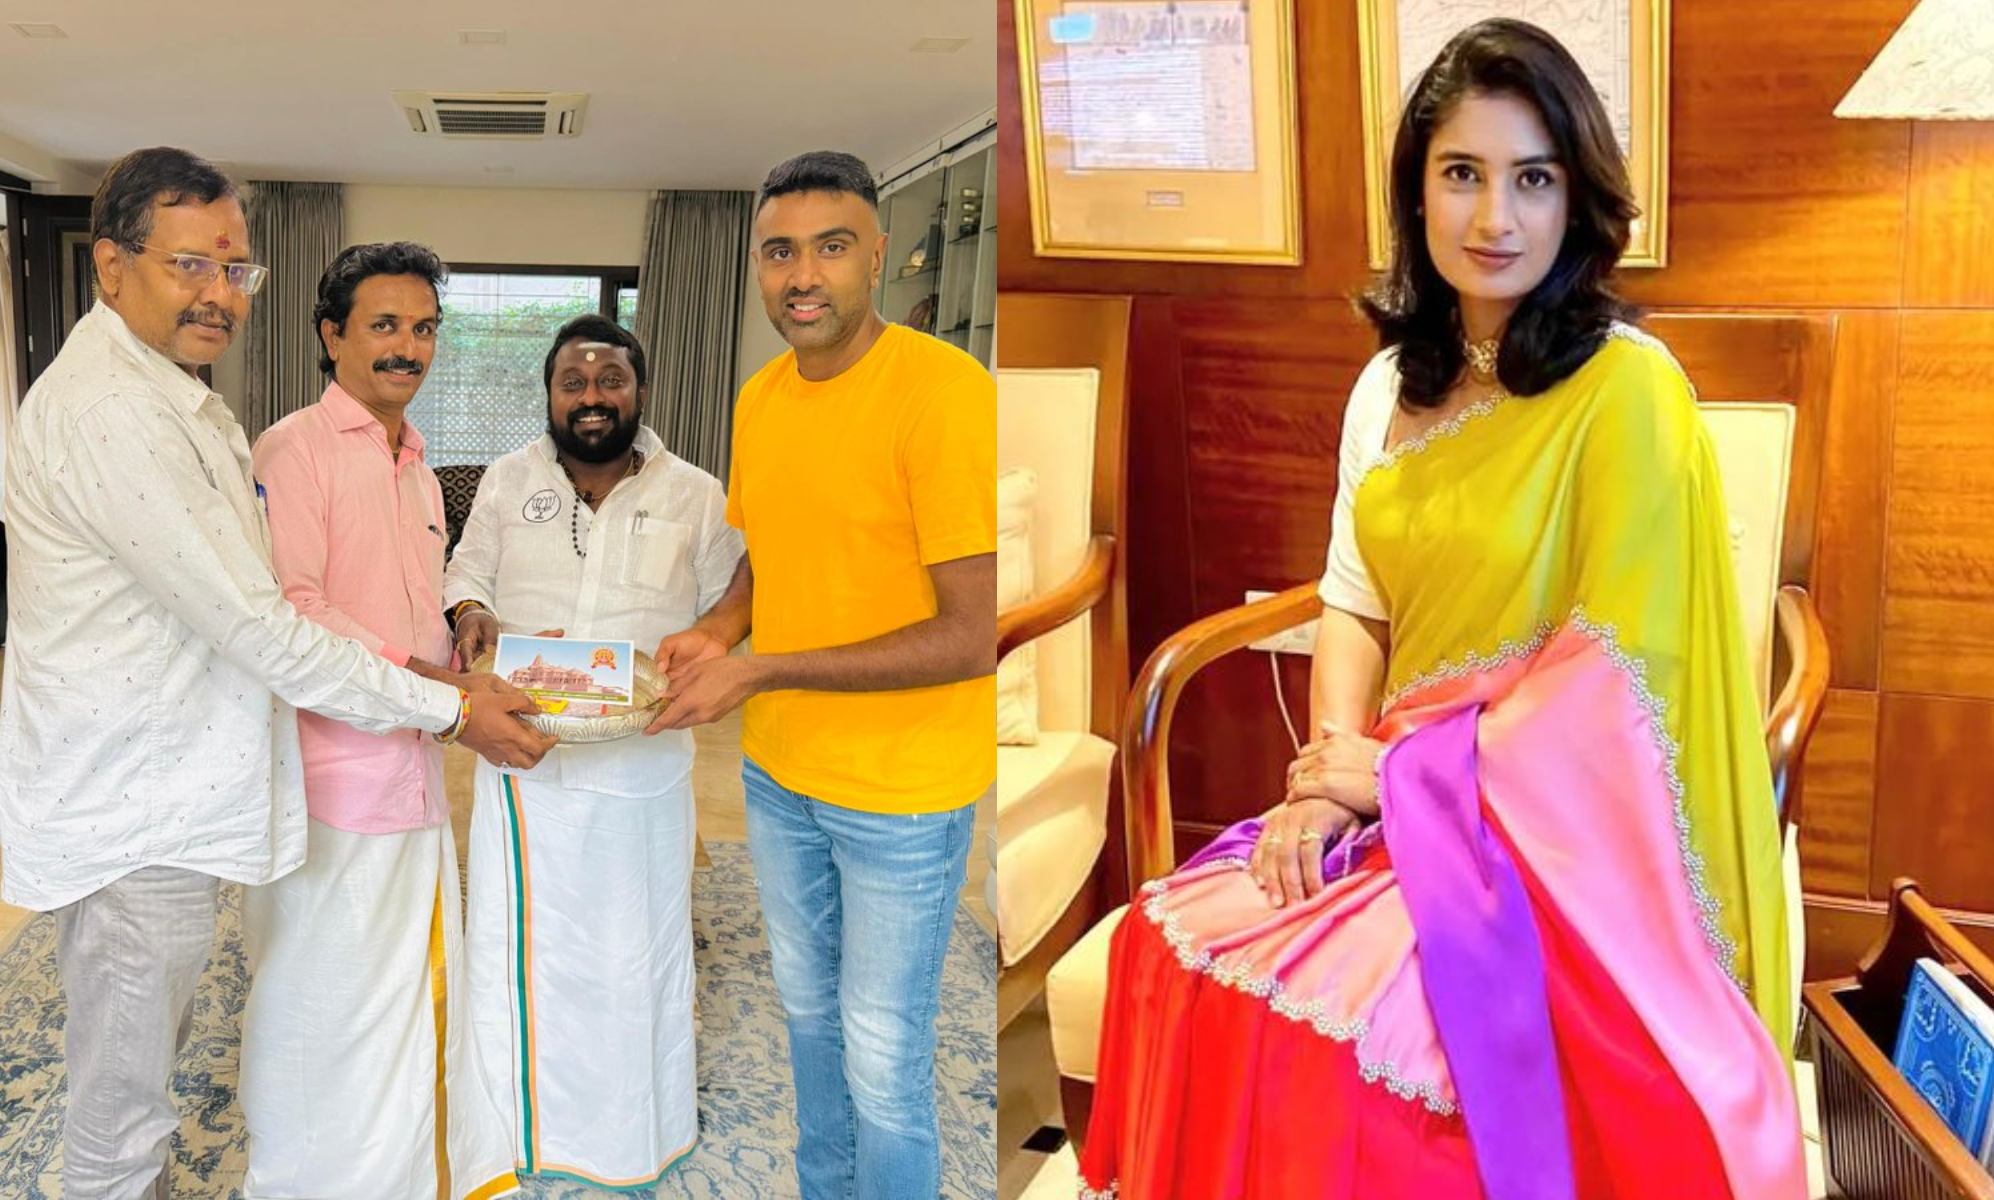 R Ashwin and Mithali Raj became the latest recipients of Ram Mandir invite | X